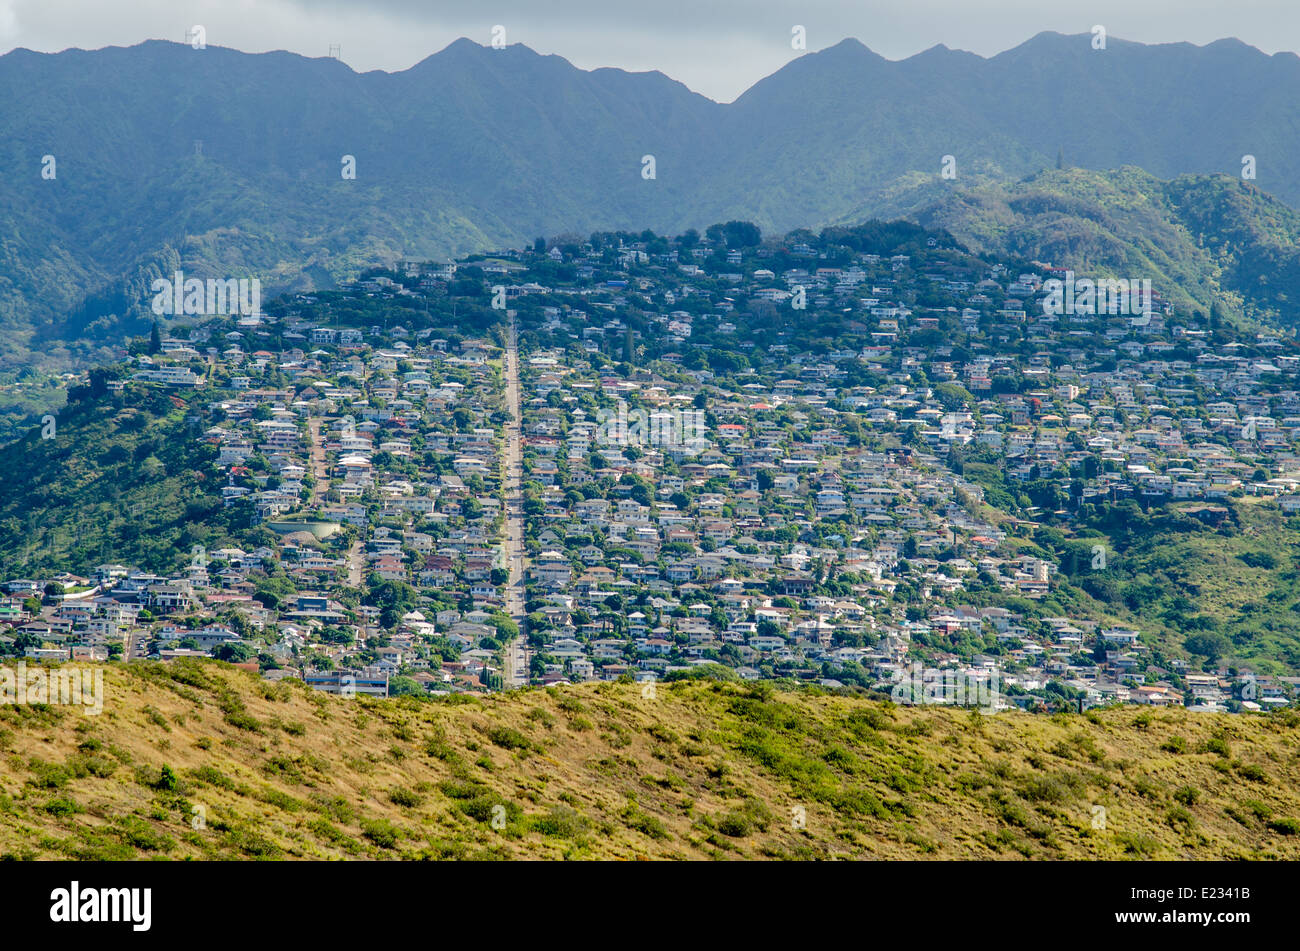 View of Waikiki from Diamonhead Mountain in Hawaii Stock Photo